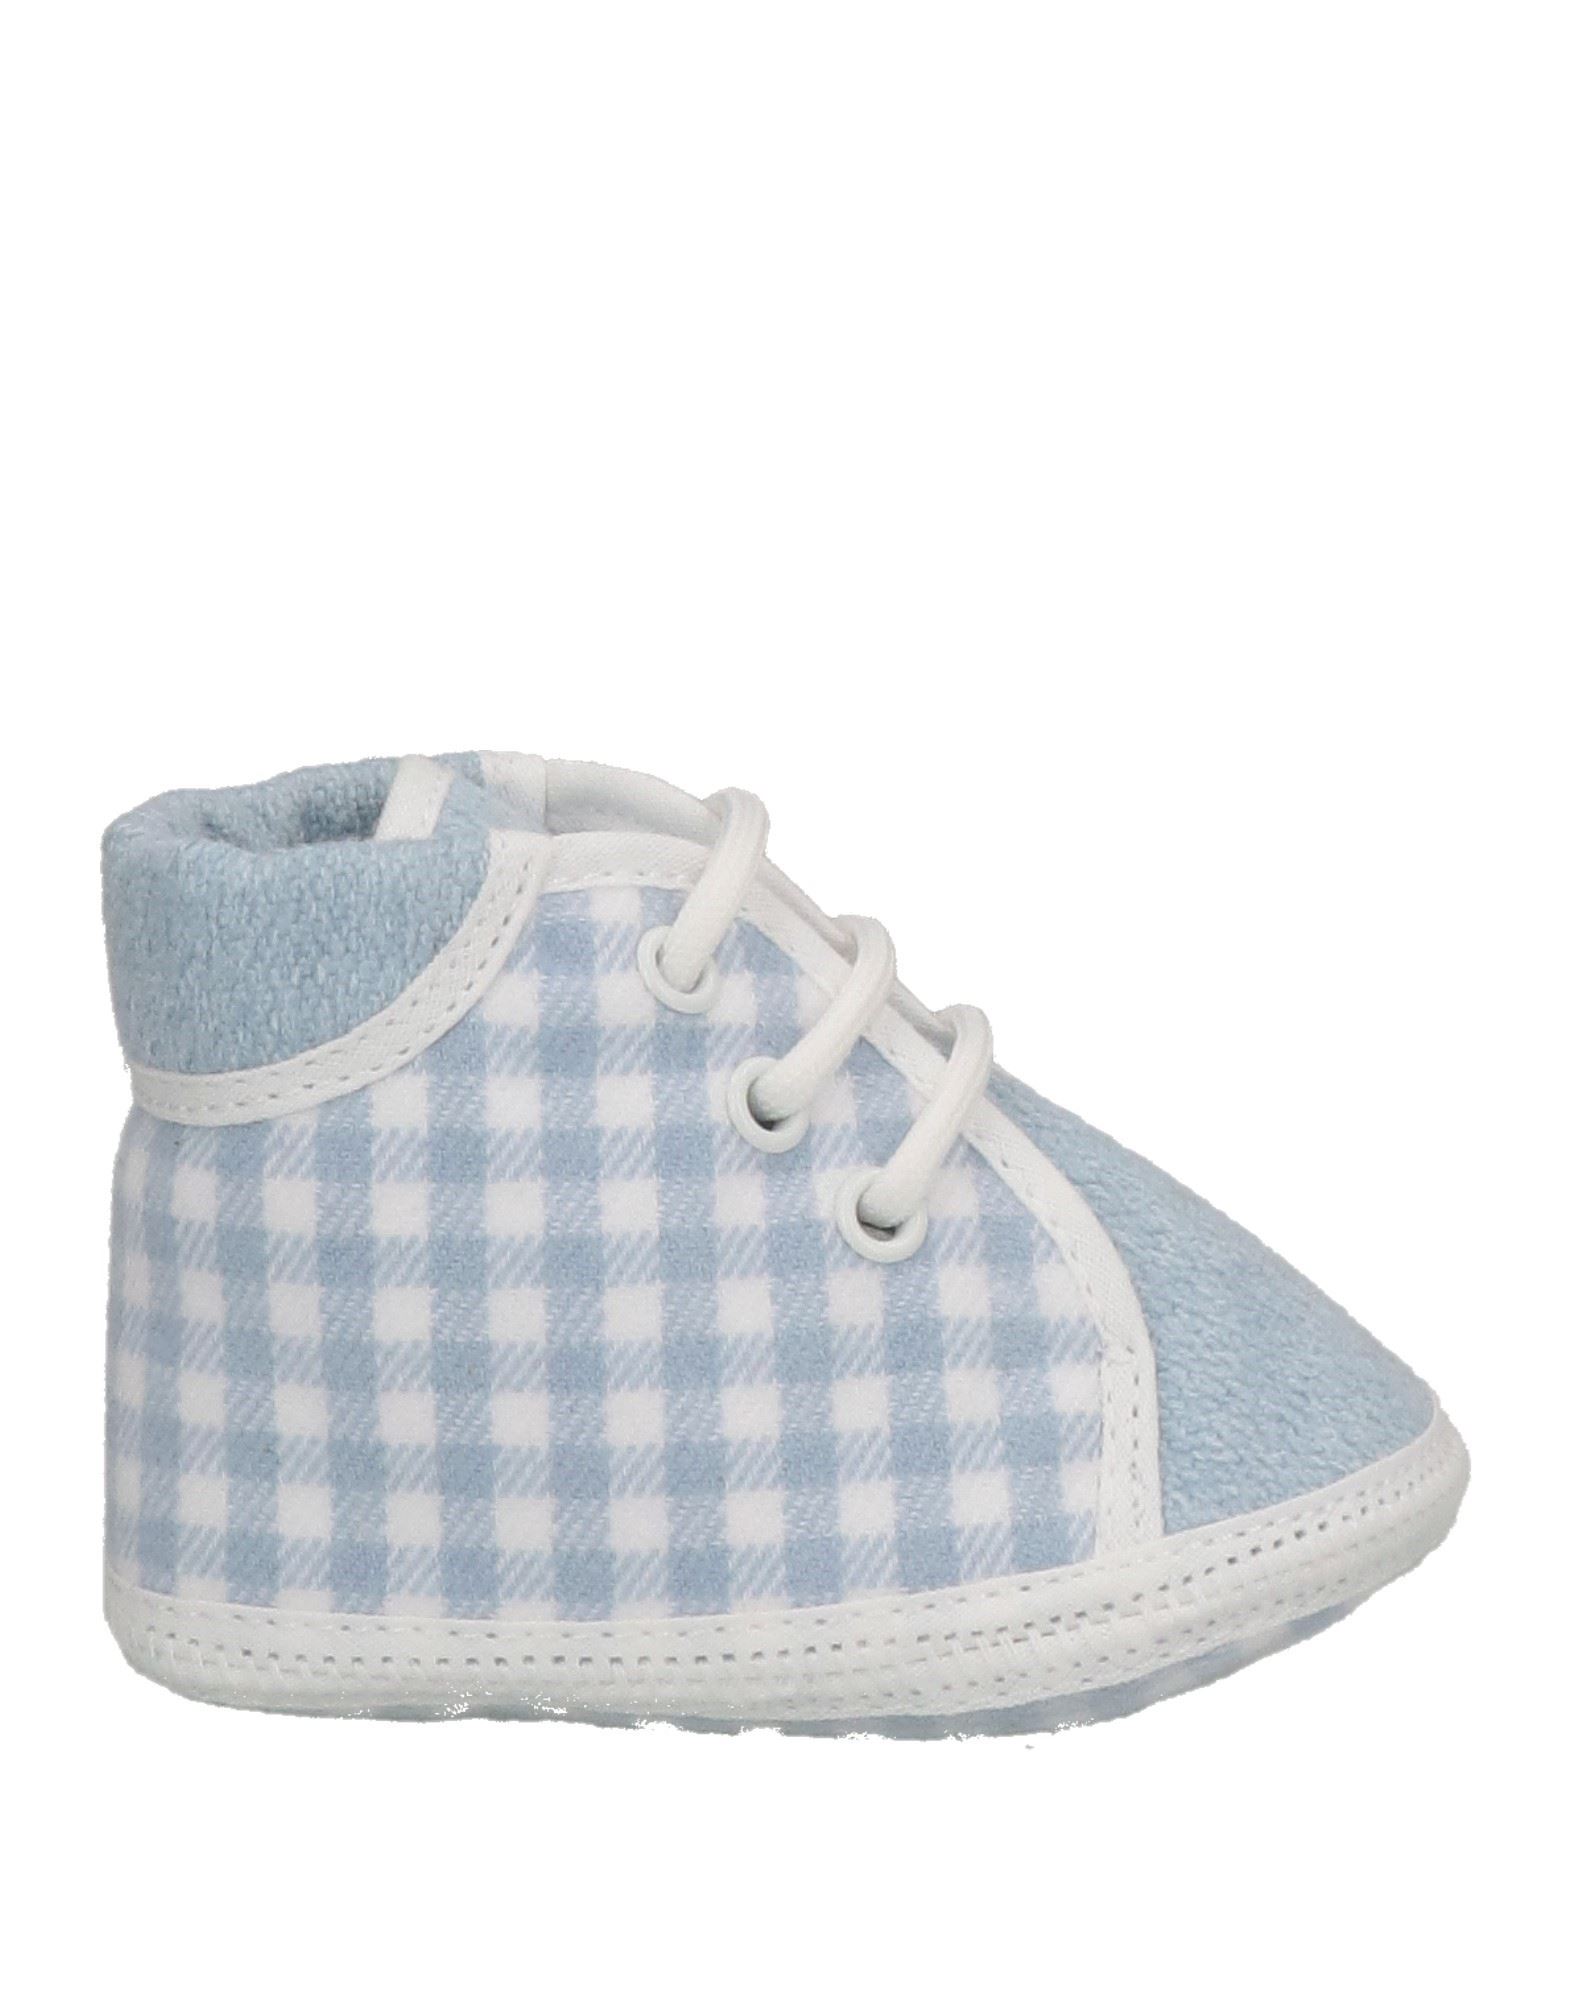 COLORICHIARI Schuhe Für Neugeborene Kinder Hellblau von COLORICHIARI